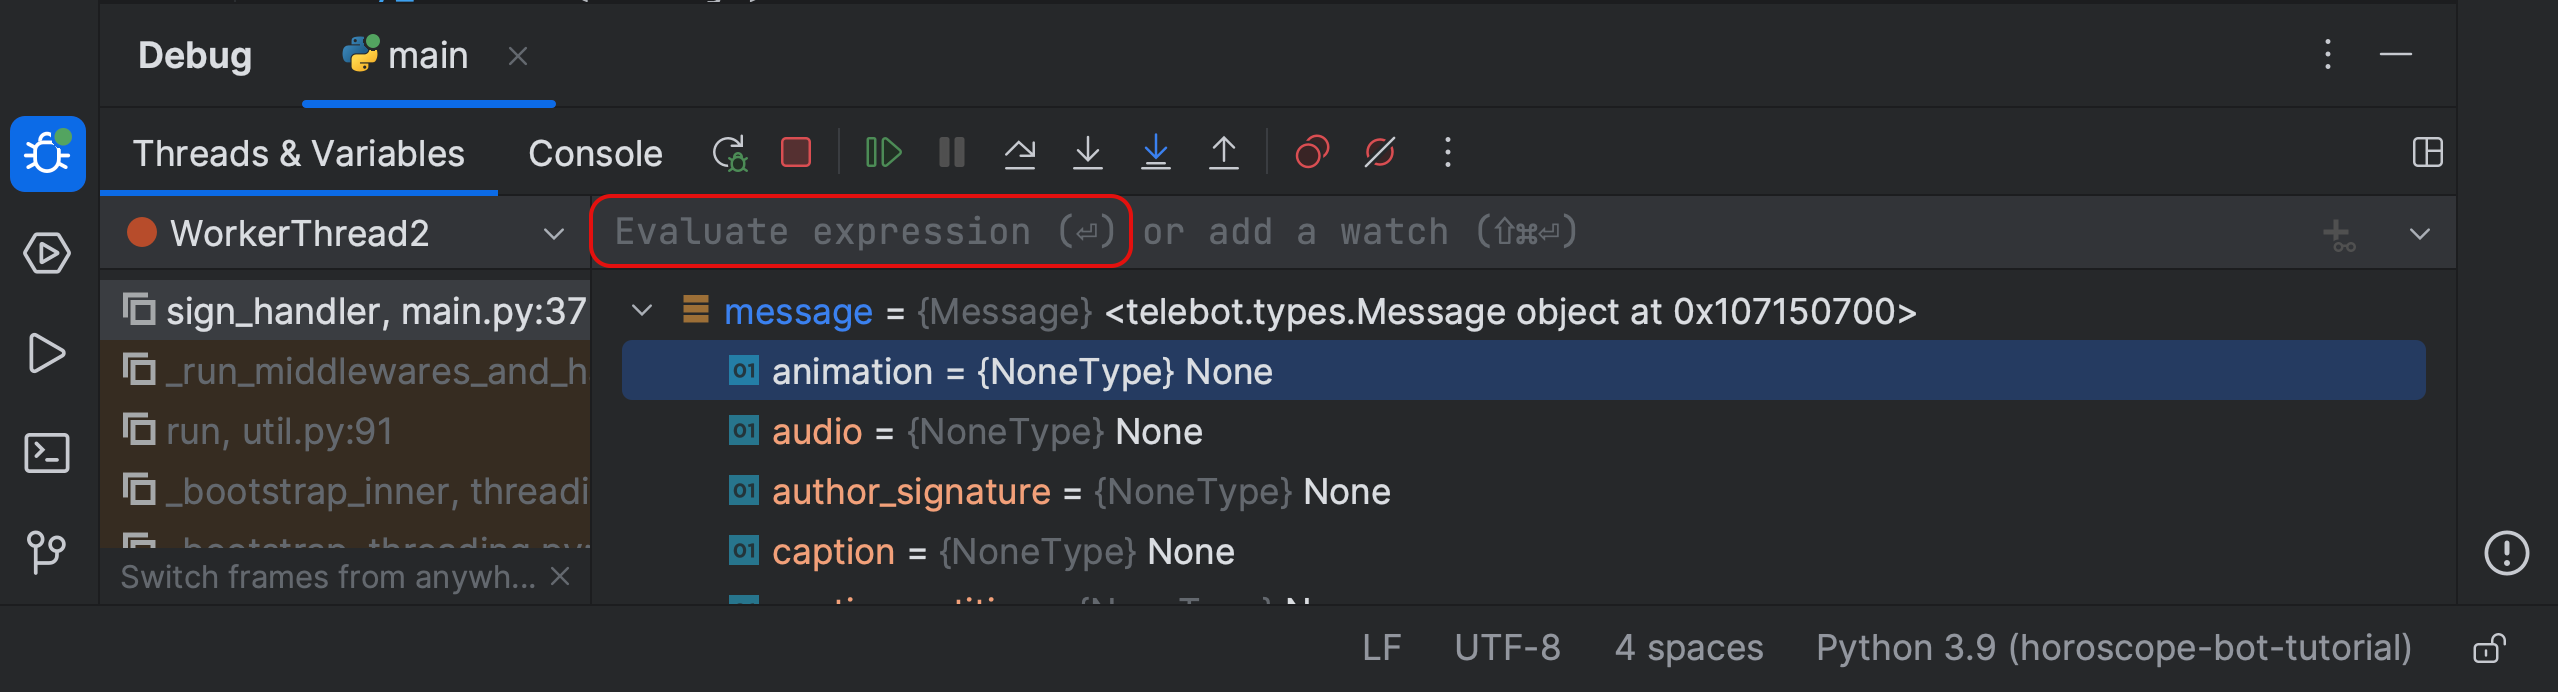 Evaluate expression option when debugging